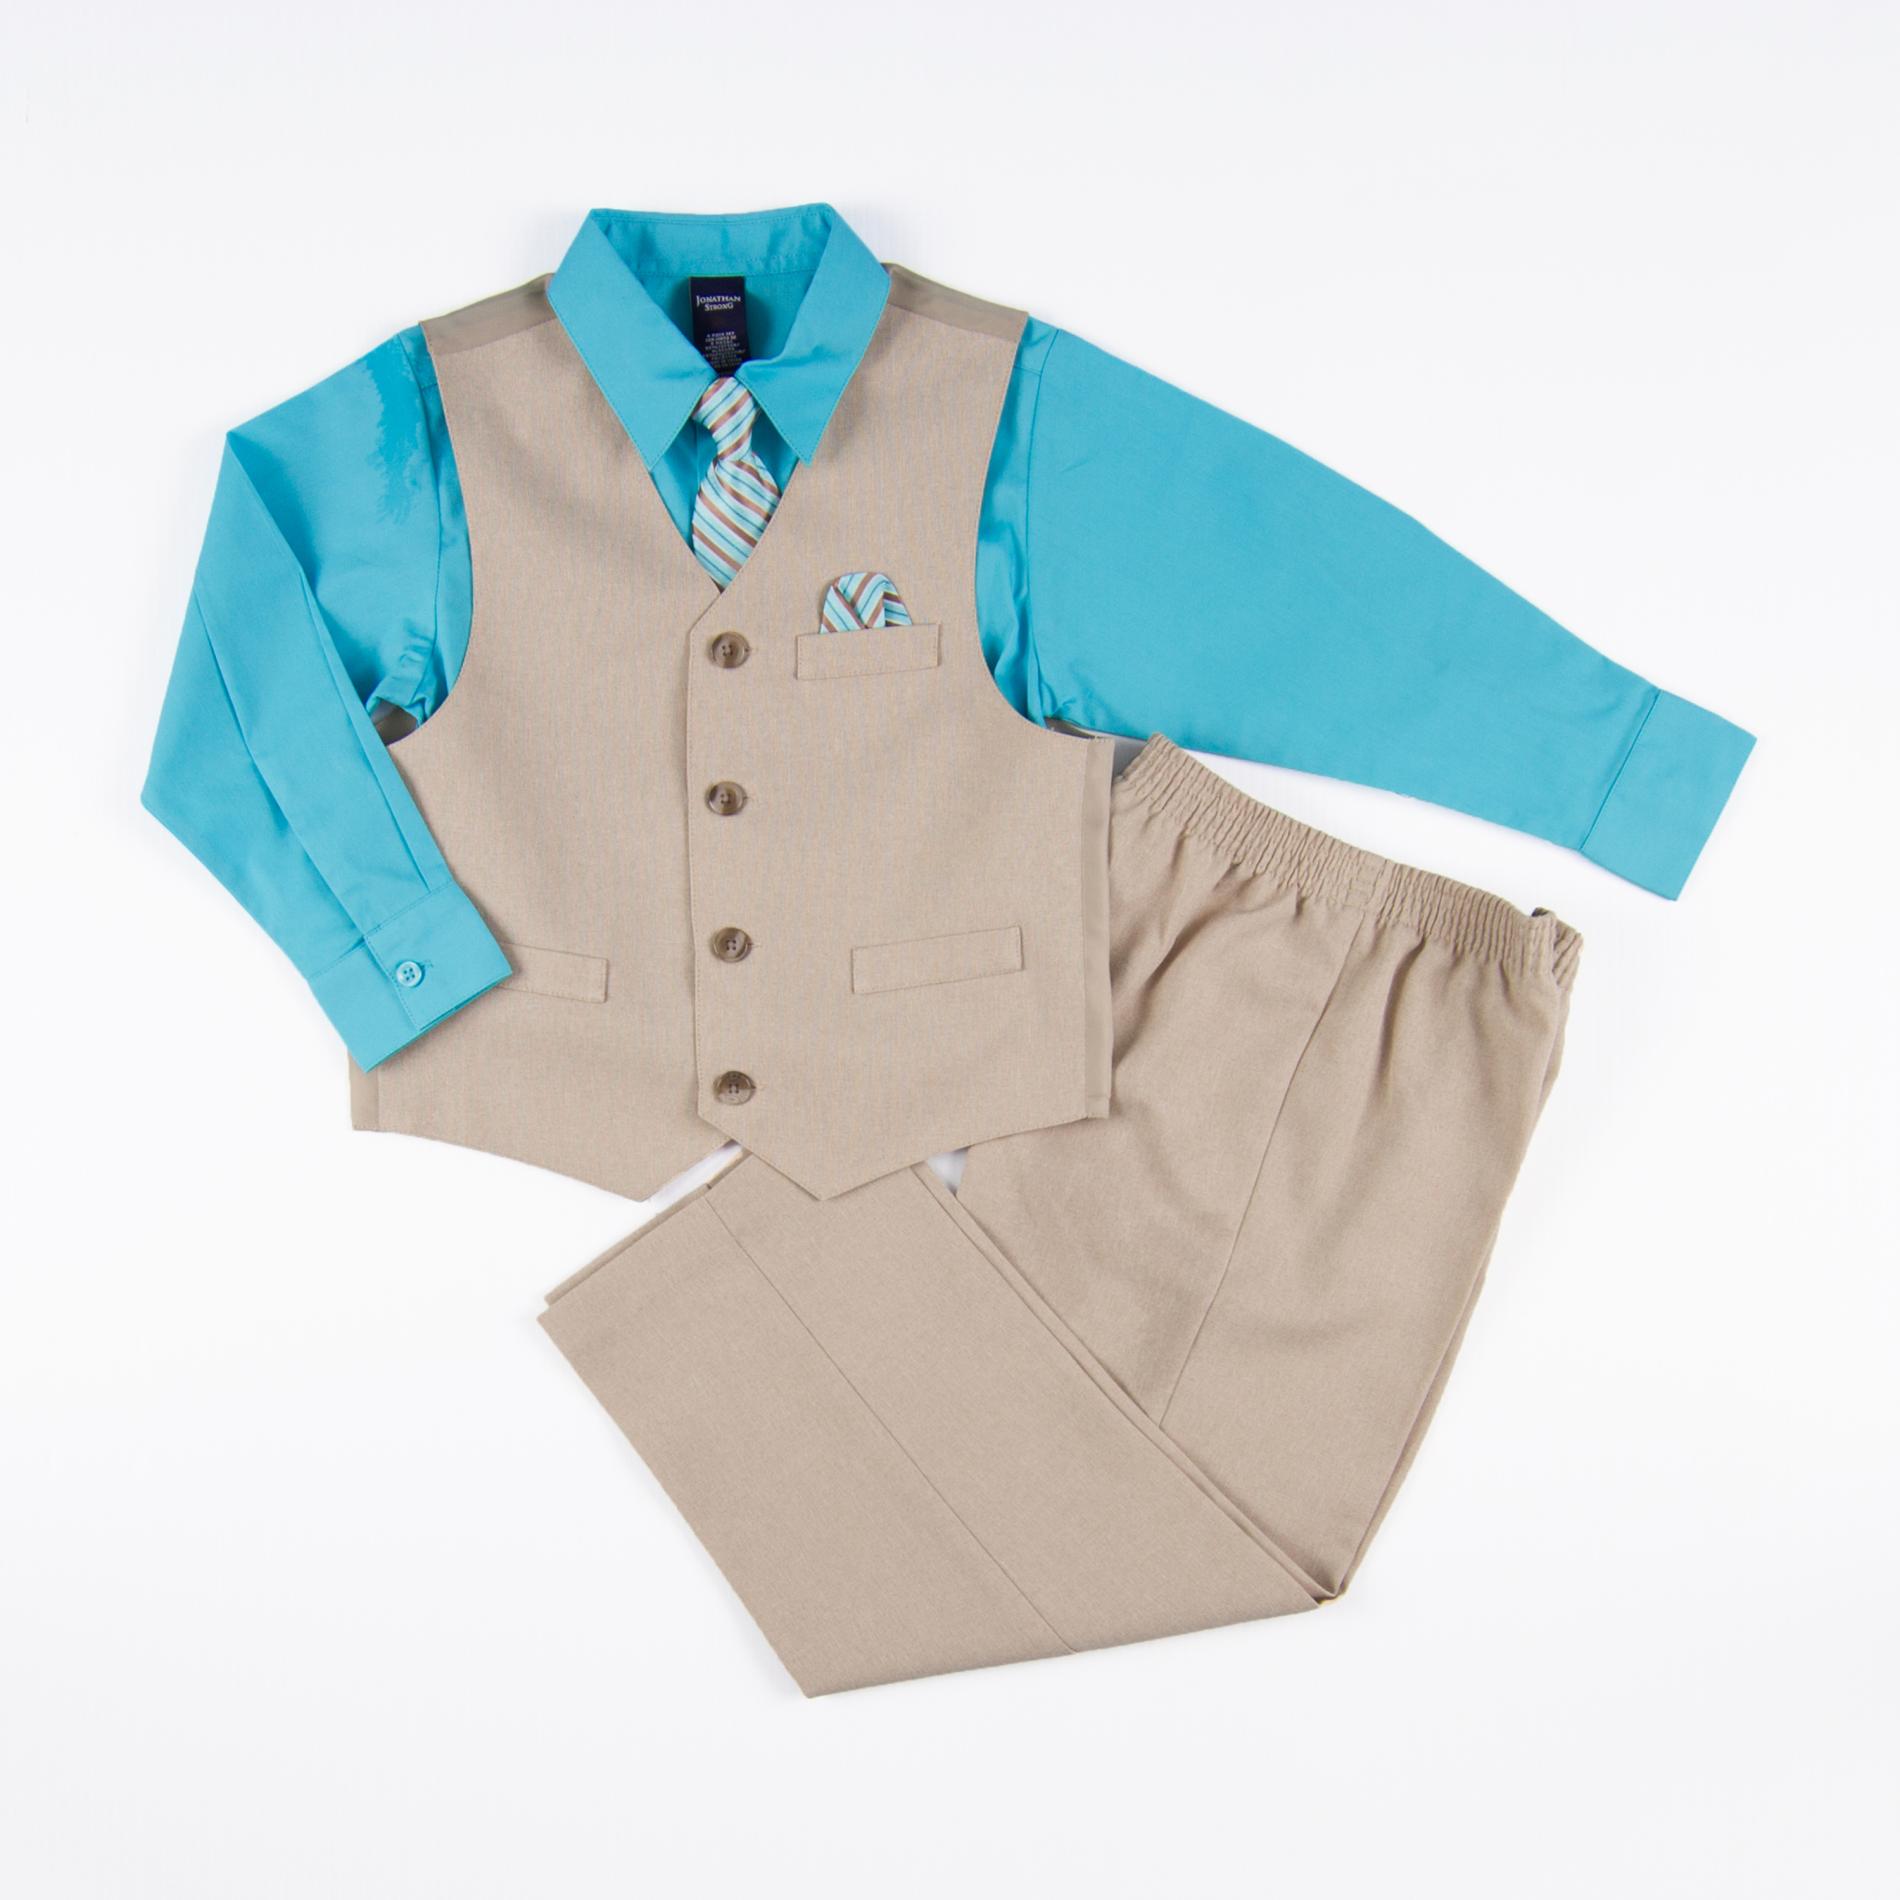 Jonathan Strong Infant & Toddler Boy's Shirt  Vest  Tie & Pants- Pocket Square